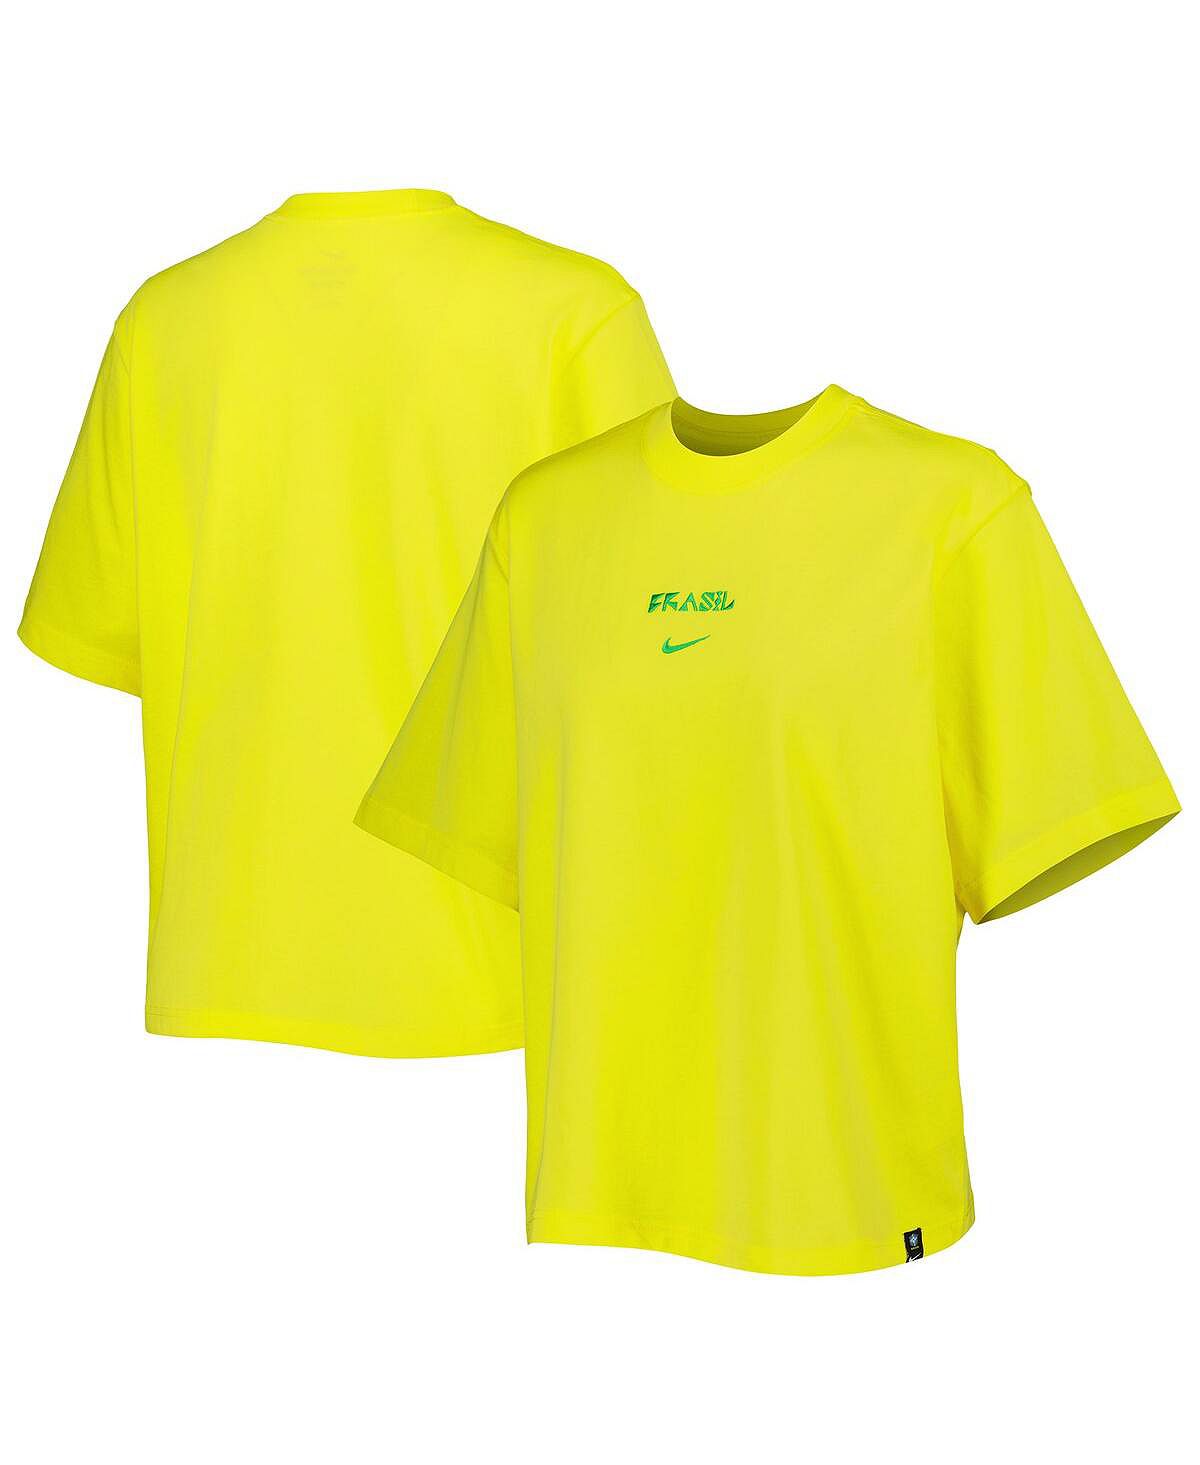 Женская желтая футболка Fearless женской сборной Бразилии Nike, желтый